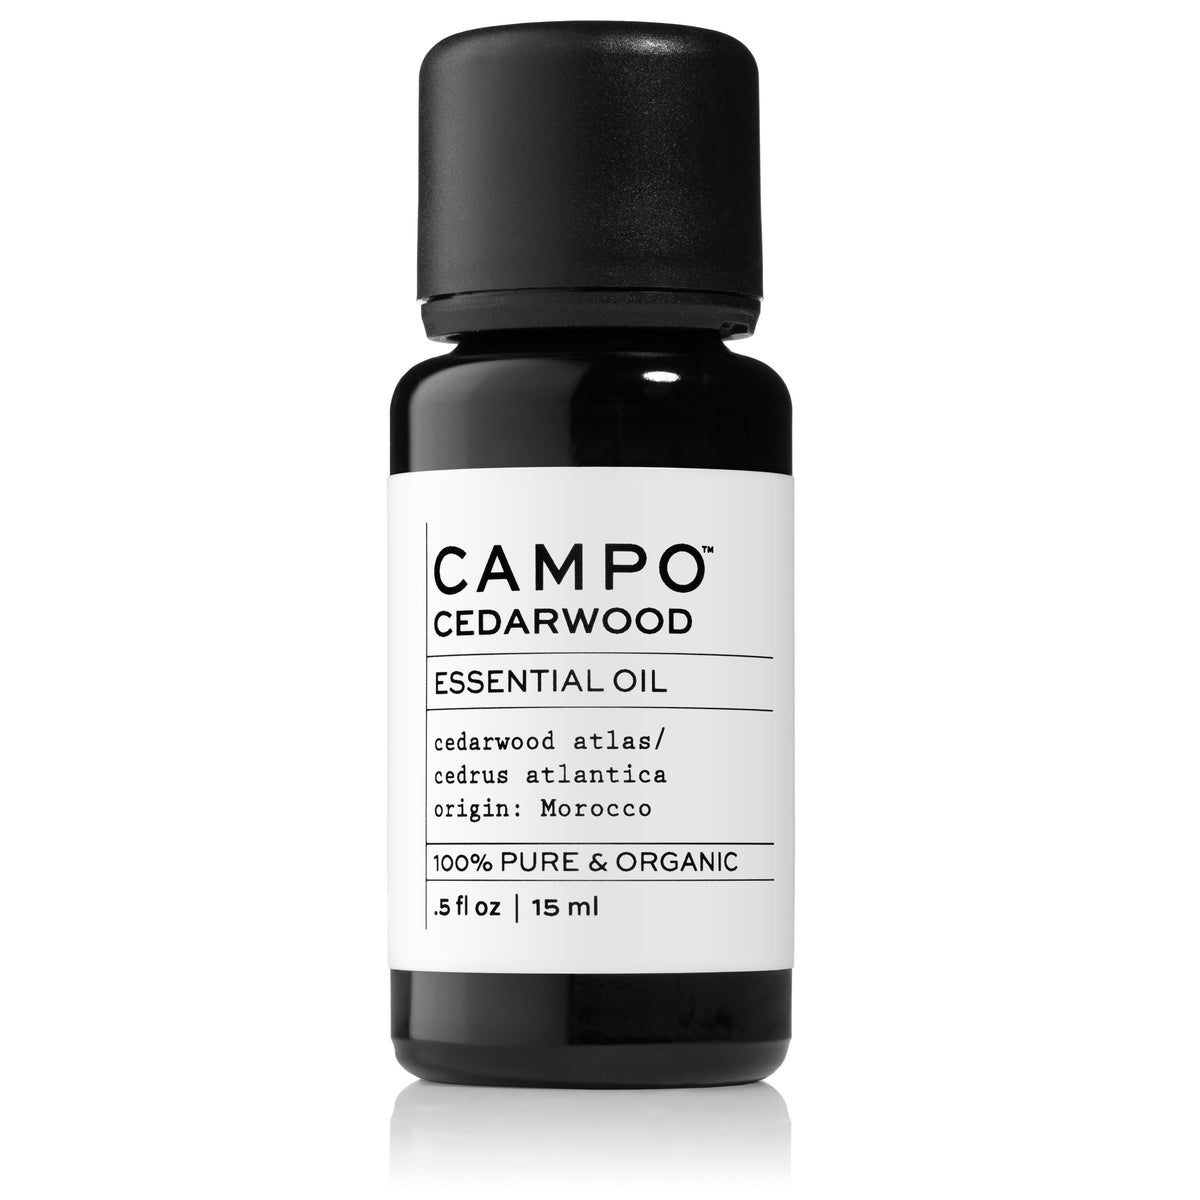 Campo Beauty 15 ml CEDARWOOD ATLAS Essential Oil Single Note .5 fl oz 100% Pure and Organic